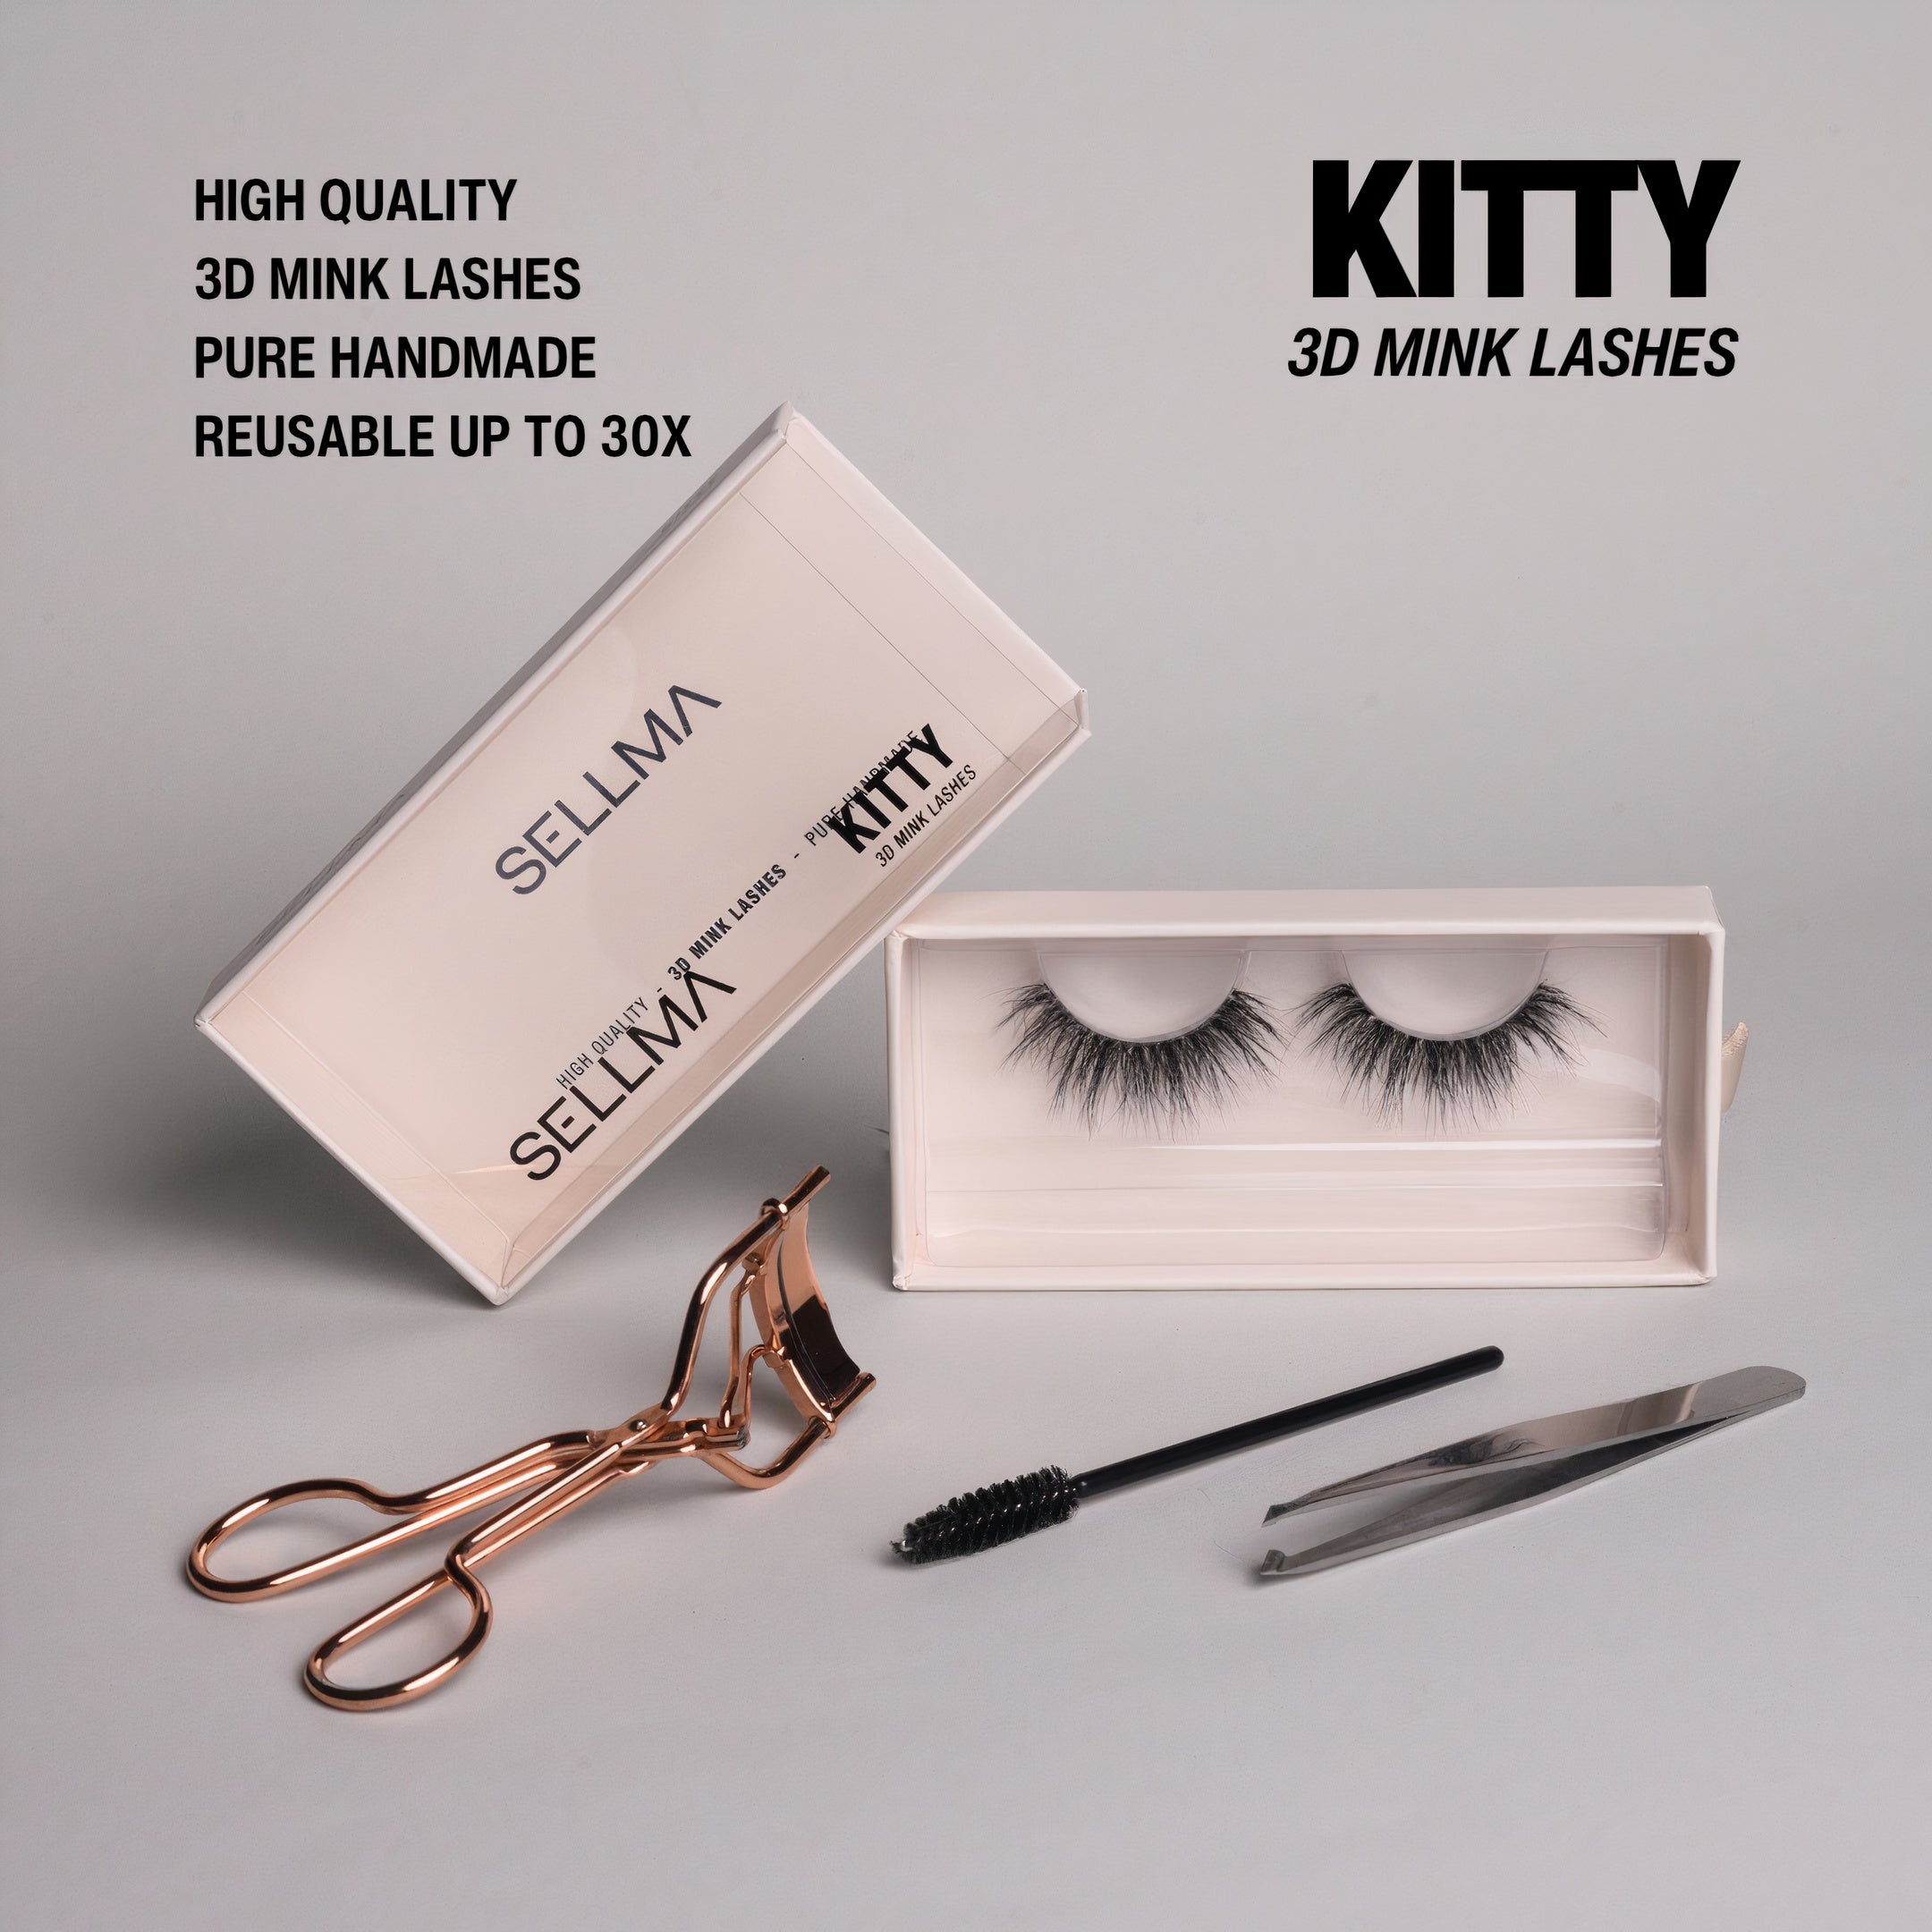 KITTY – 3D MINK LASHES